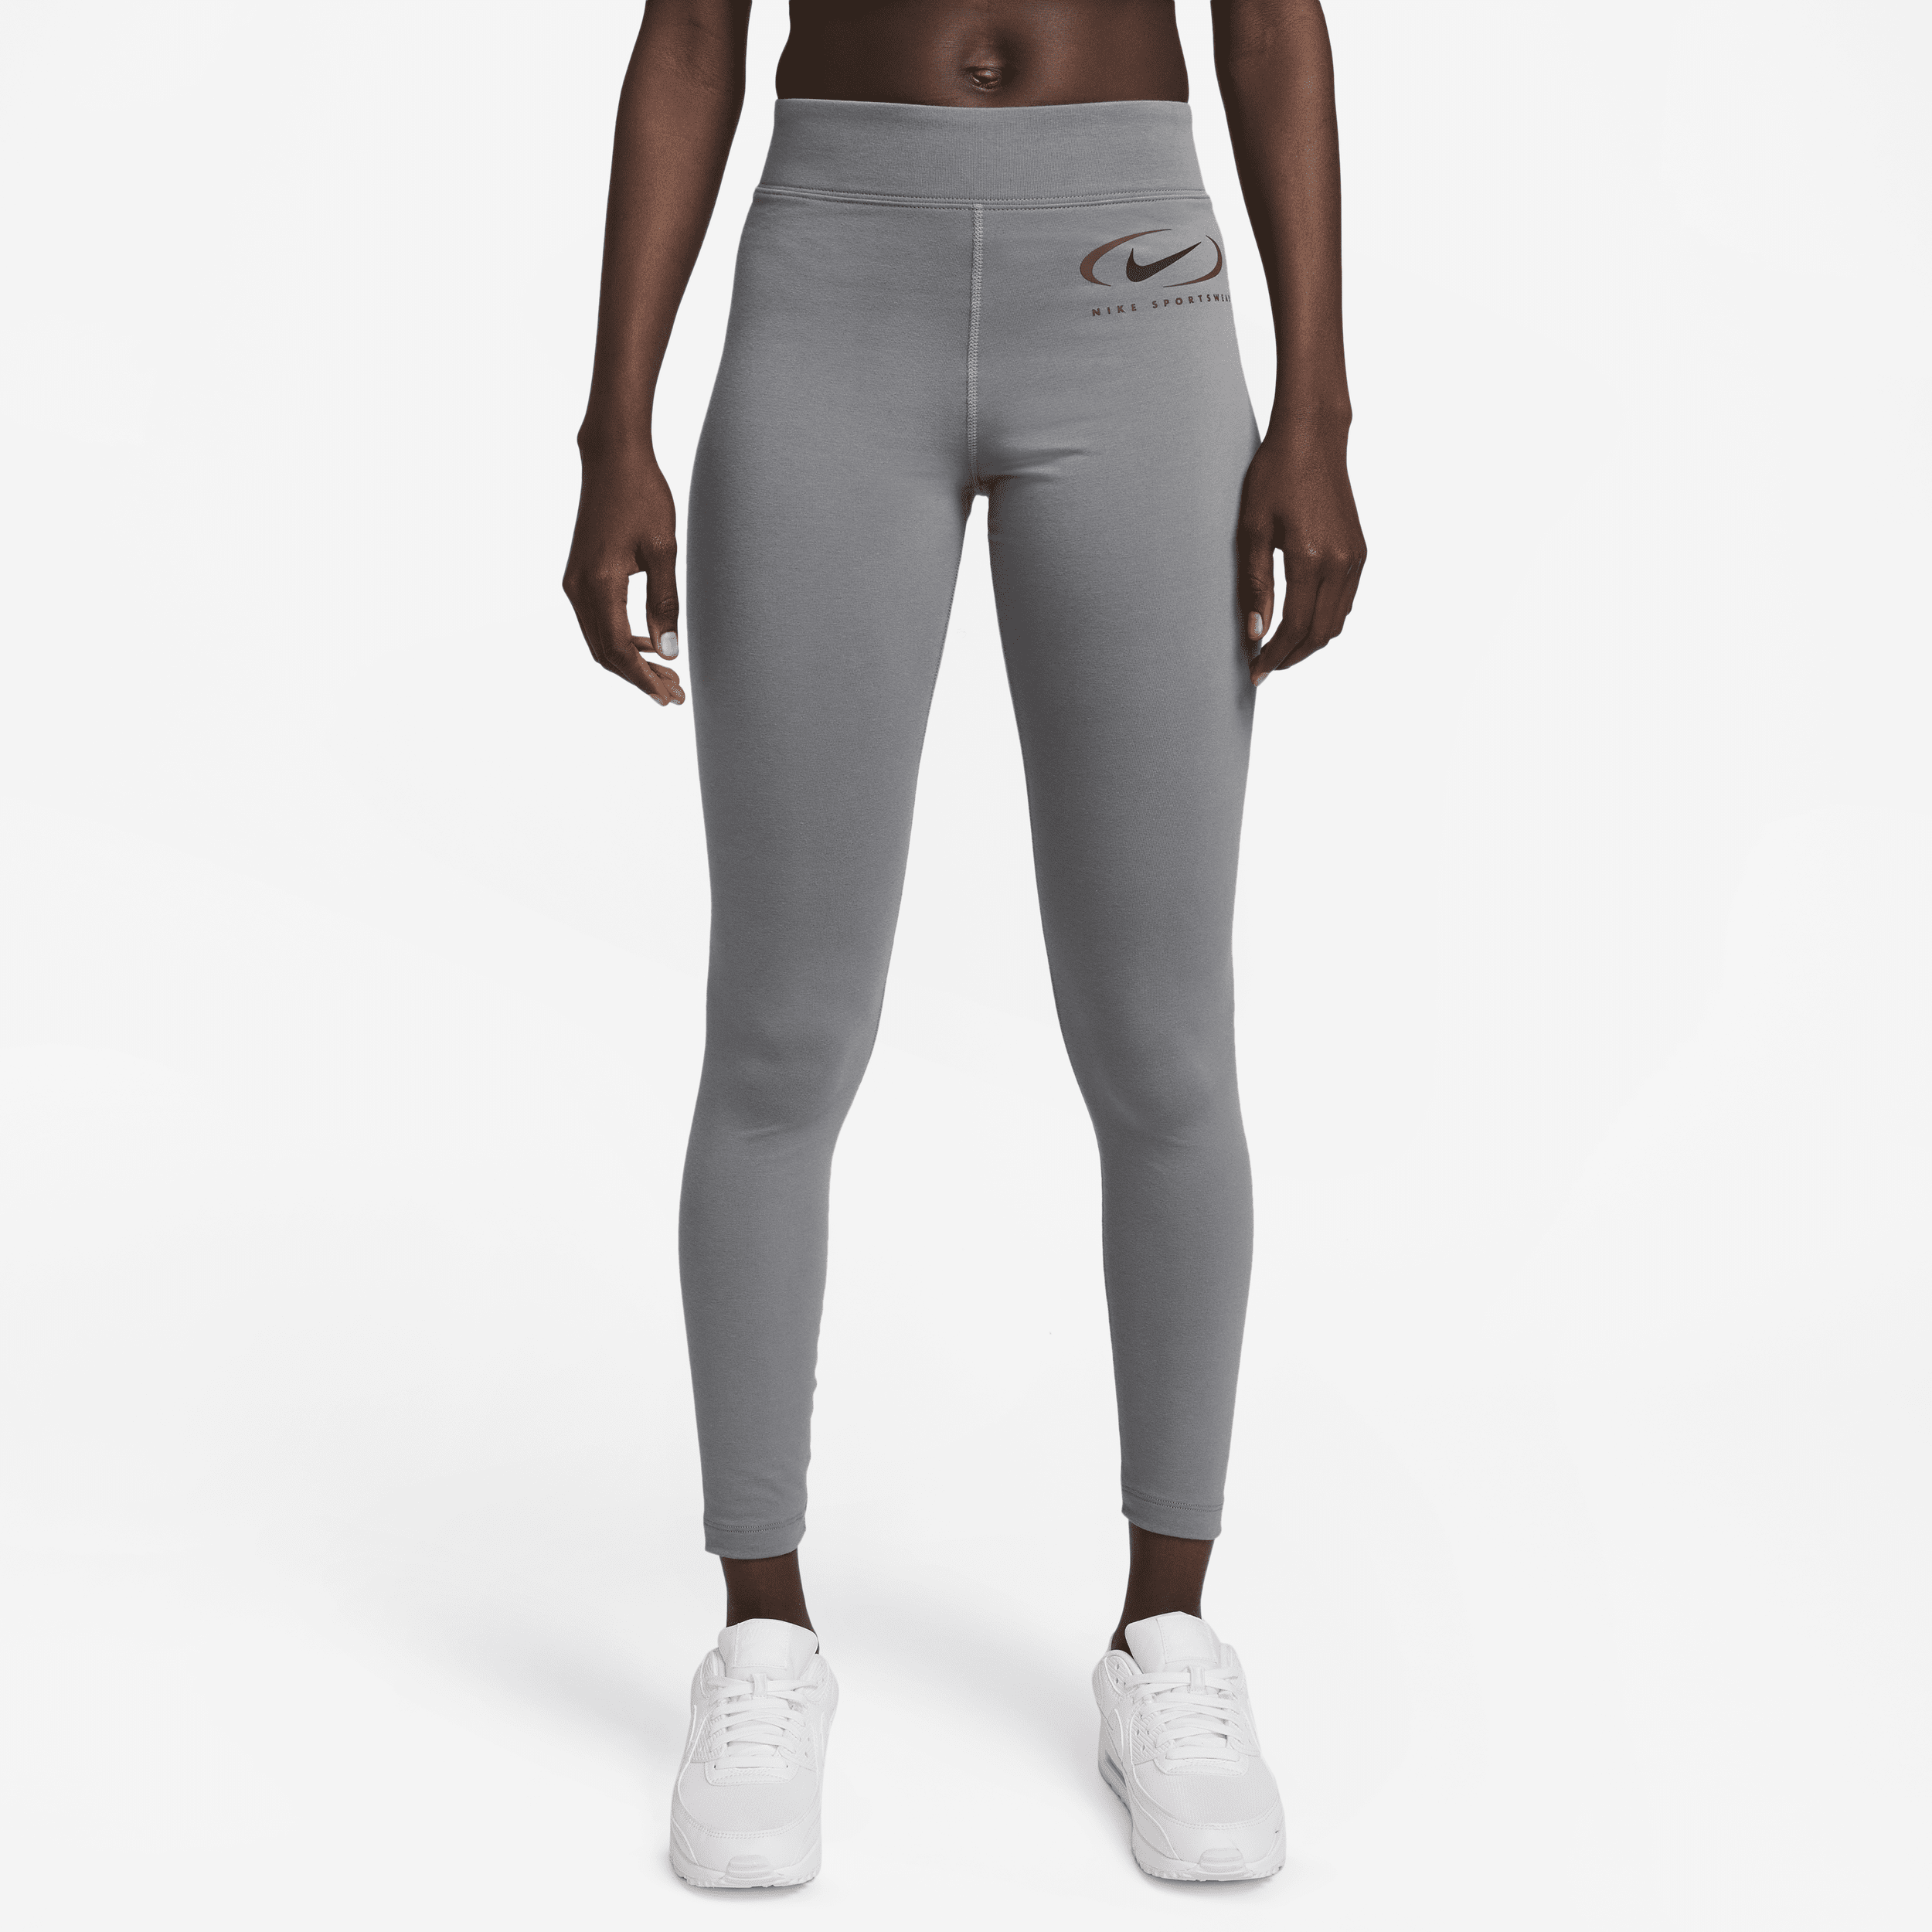 Nike Sportswear-leggings i fuld længde med høj talje og grafik til kvinder - grå